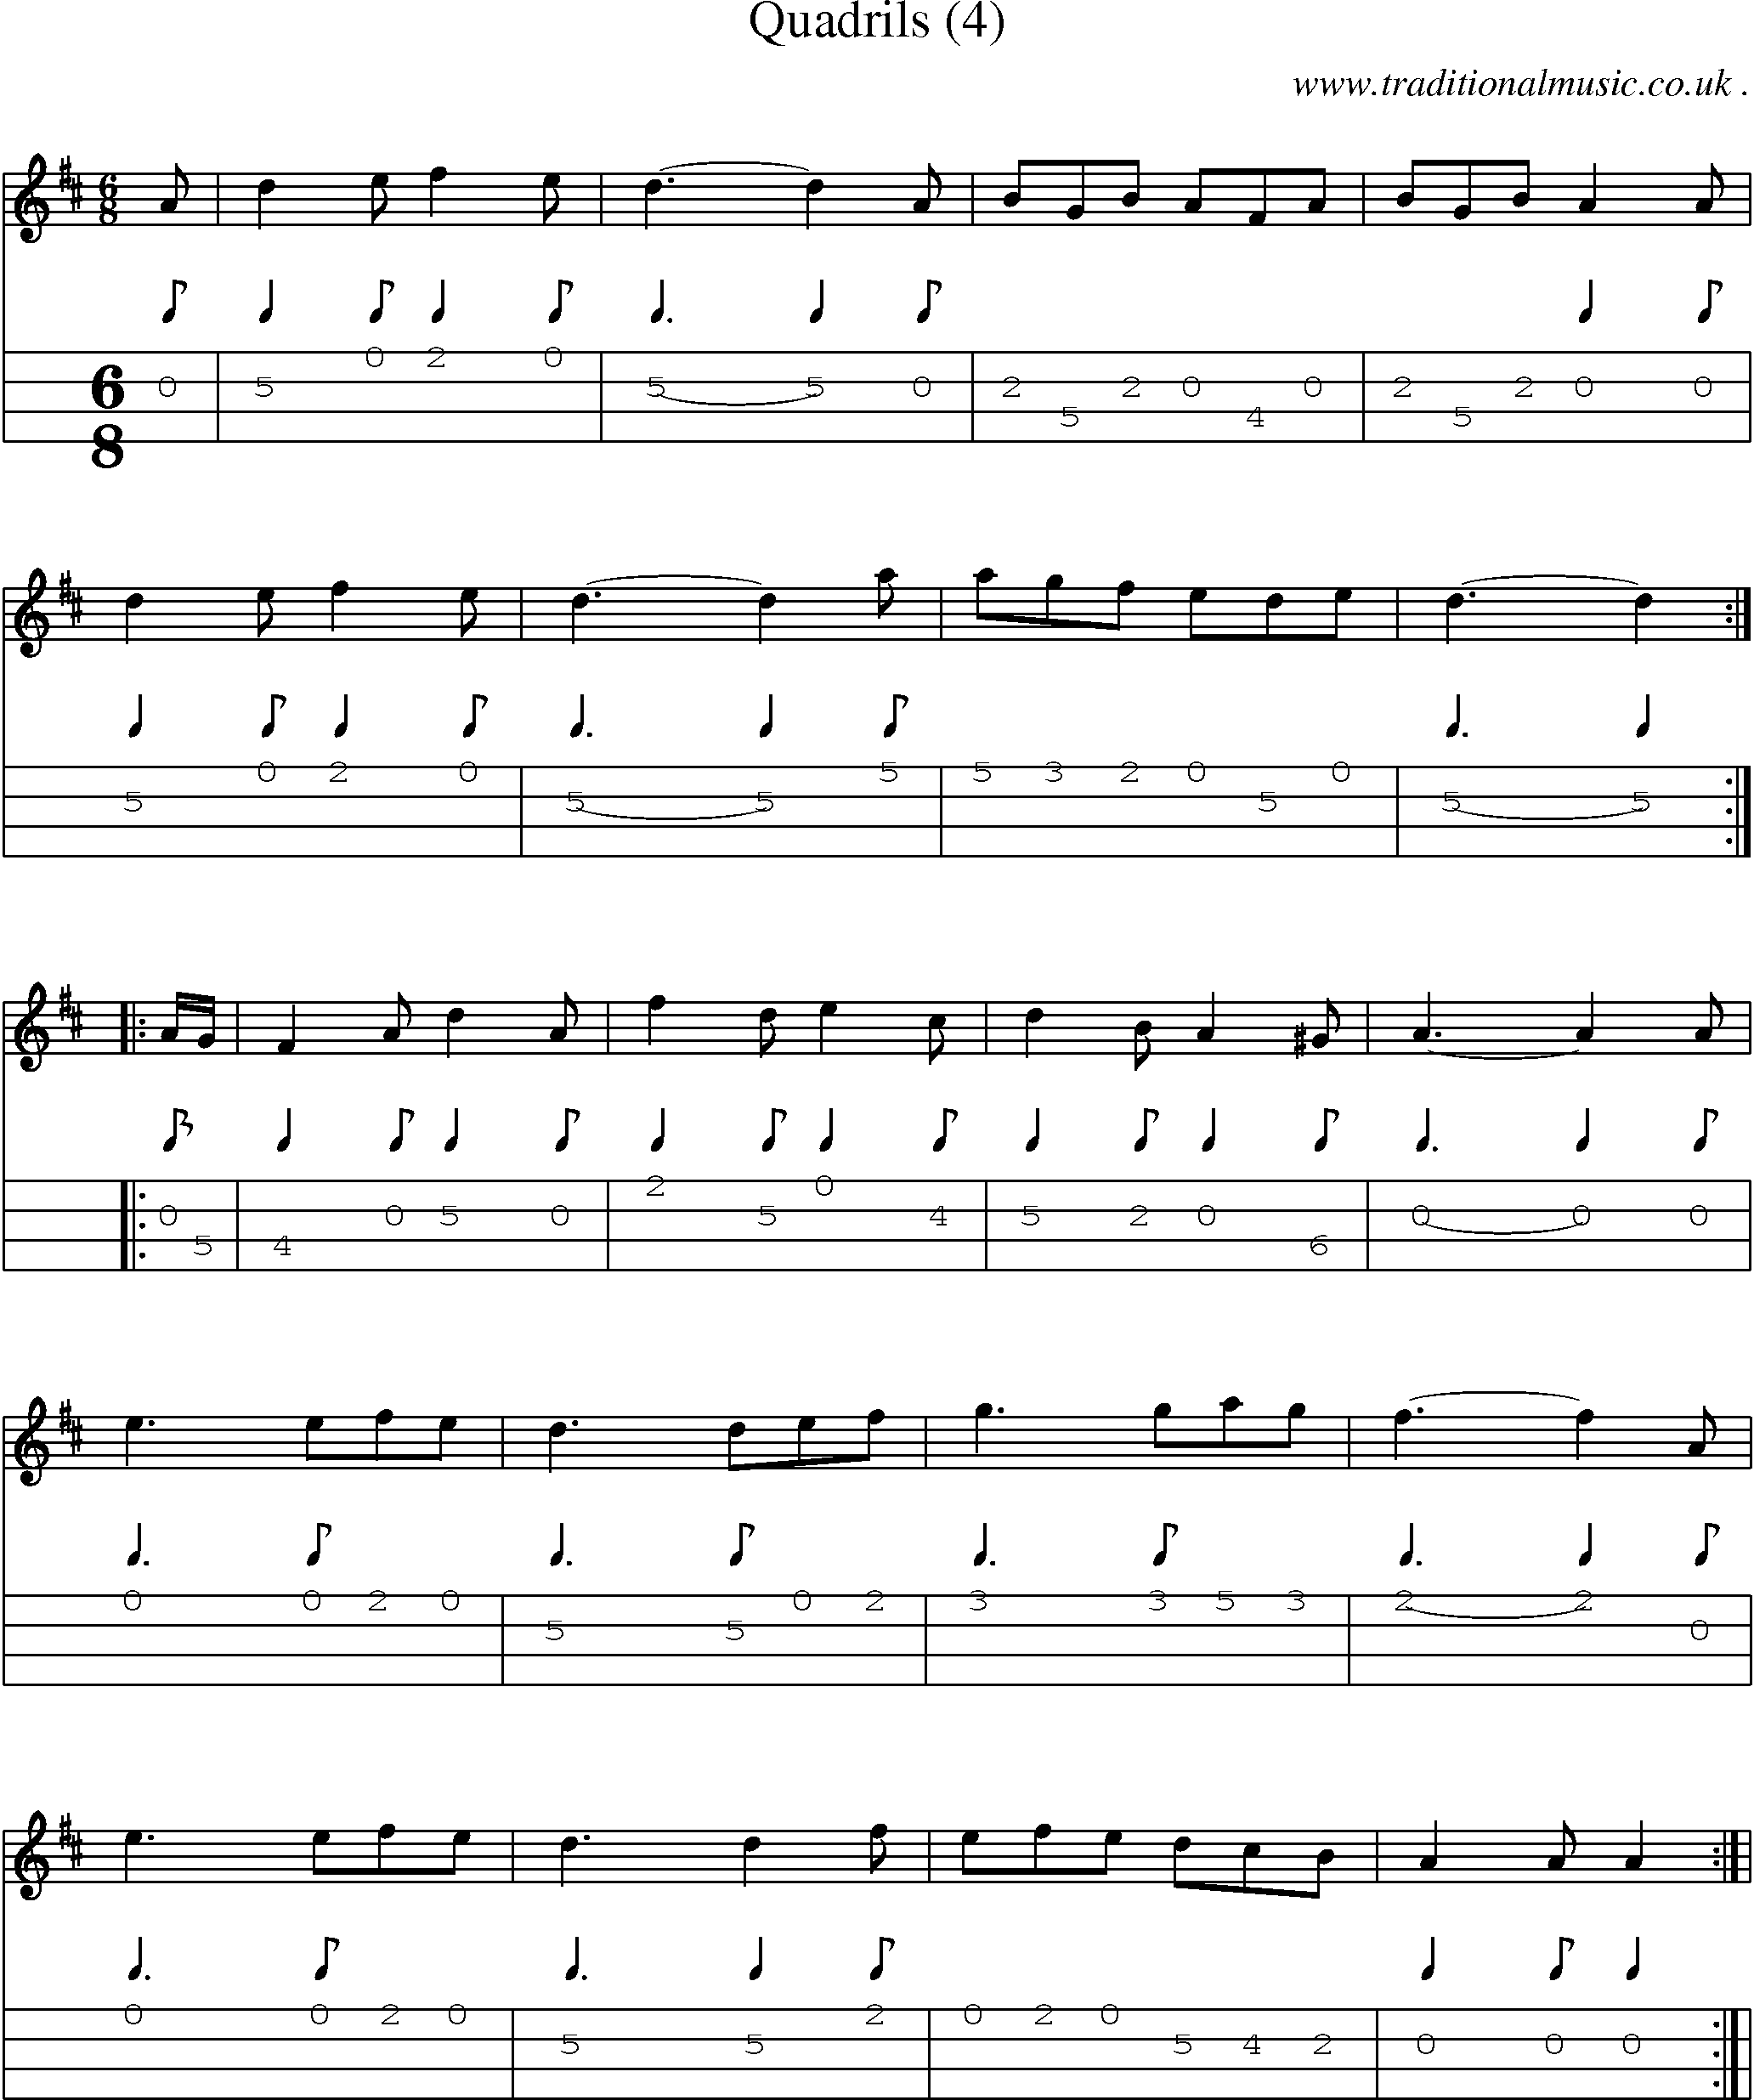 Sheet-Music and Mandolin Tabs for Quadrils (4)